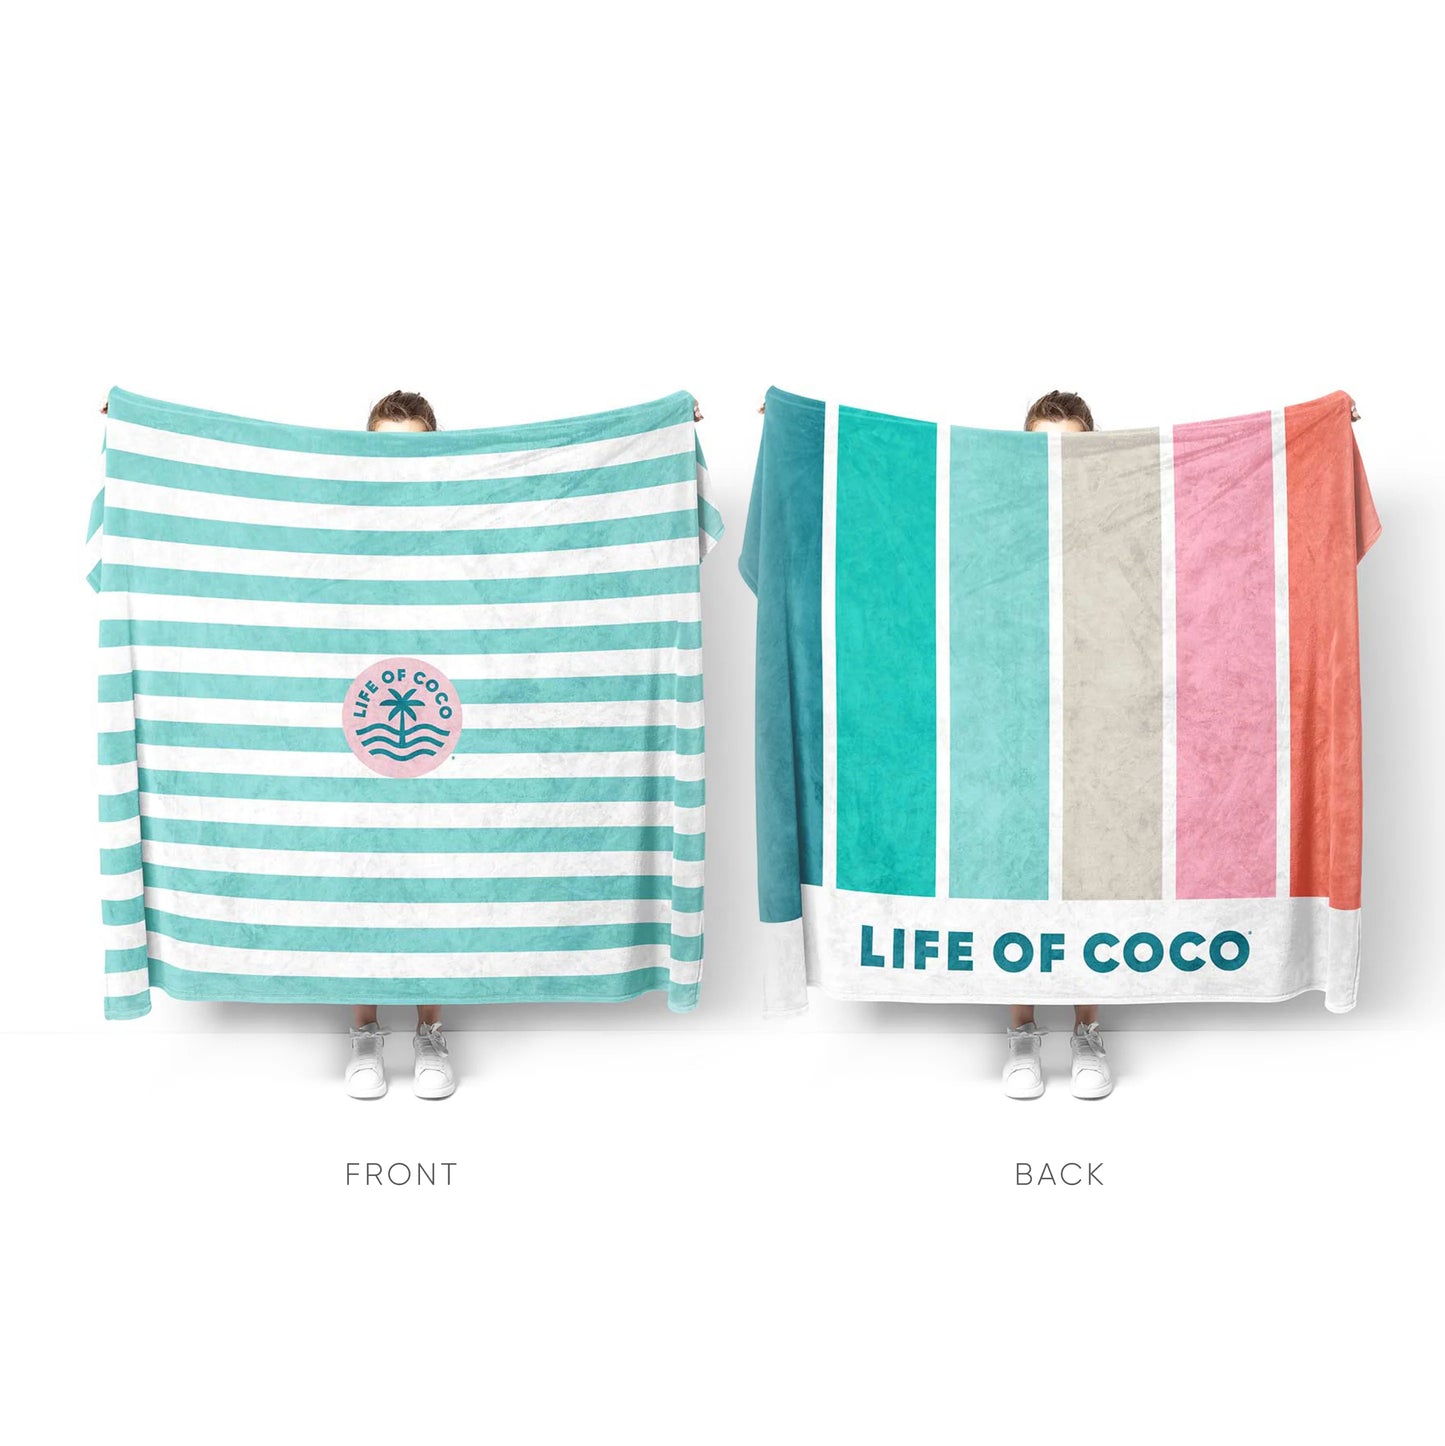 Life of Coco Sand-free beach towel XL reversible 1.8m x 1.6m - Rainbow